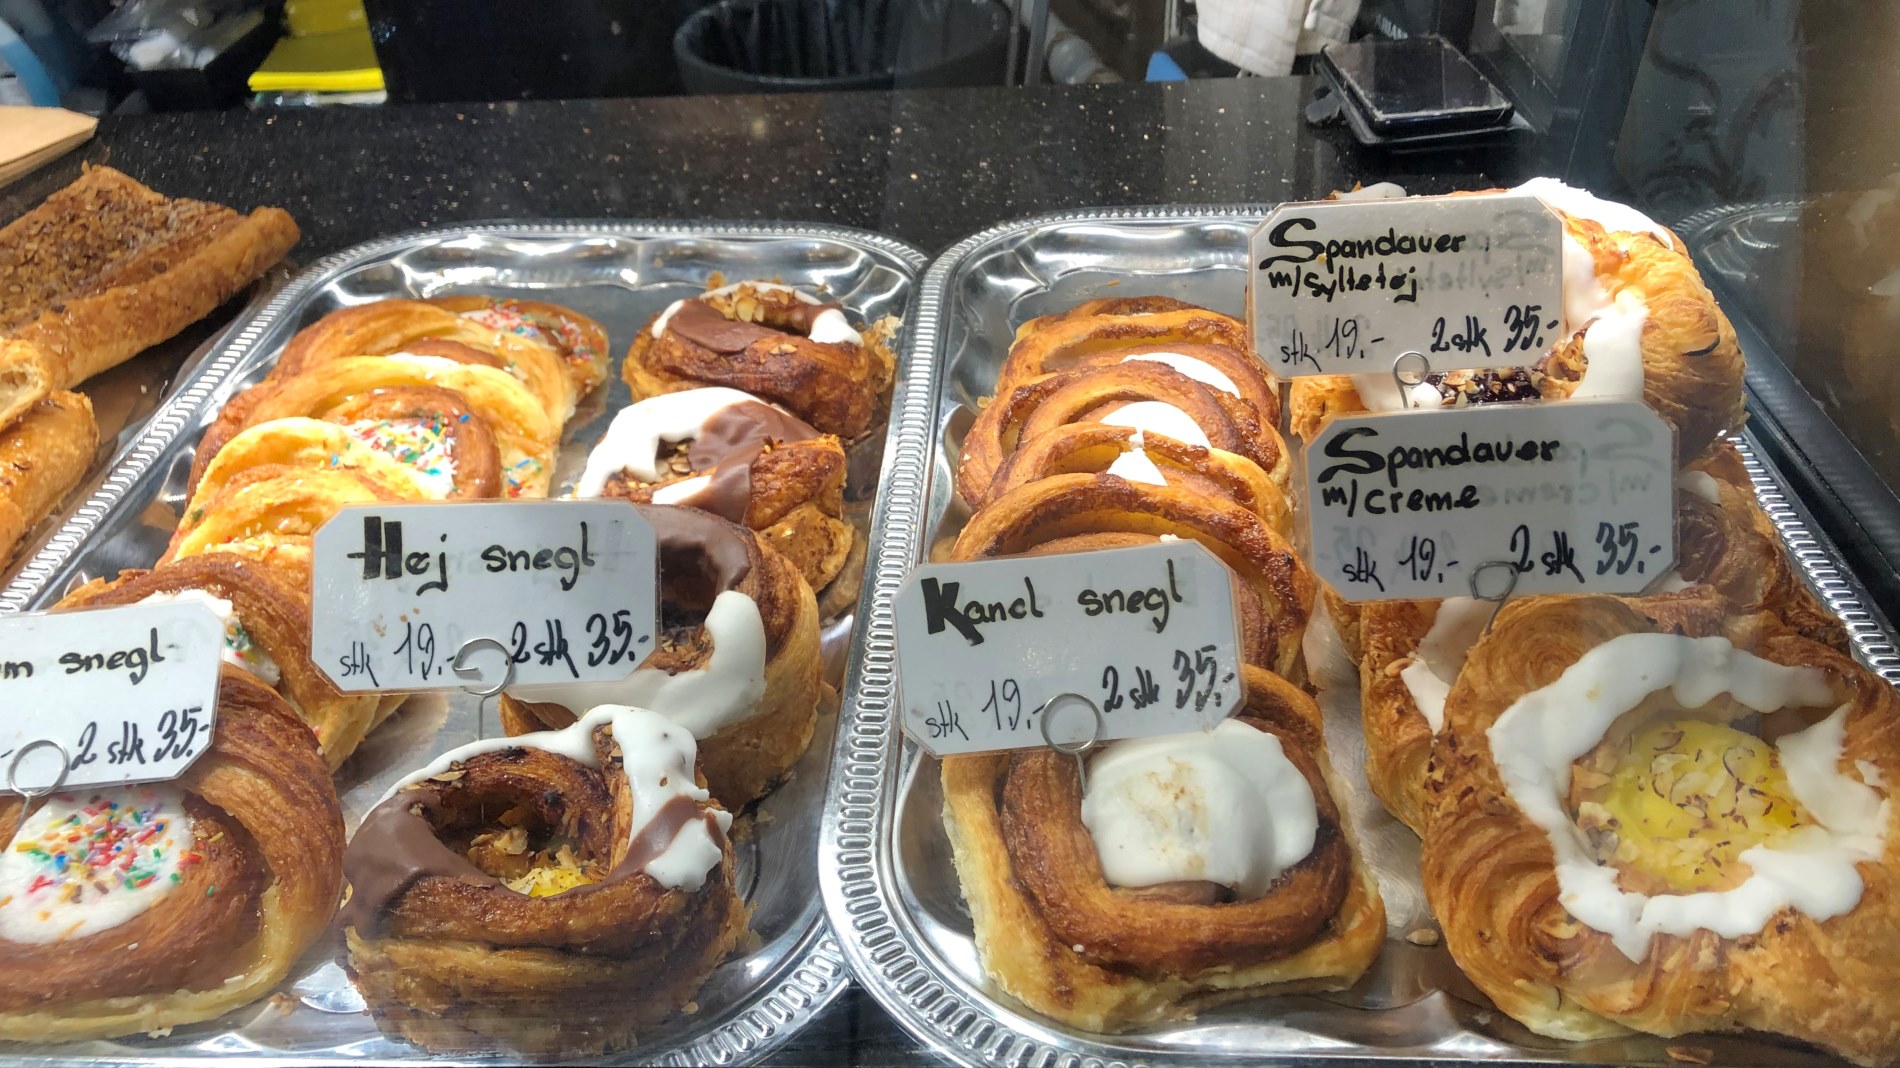 Danish pastry with cinnamon - we call them "cinnamon snails".